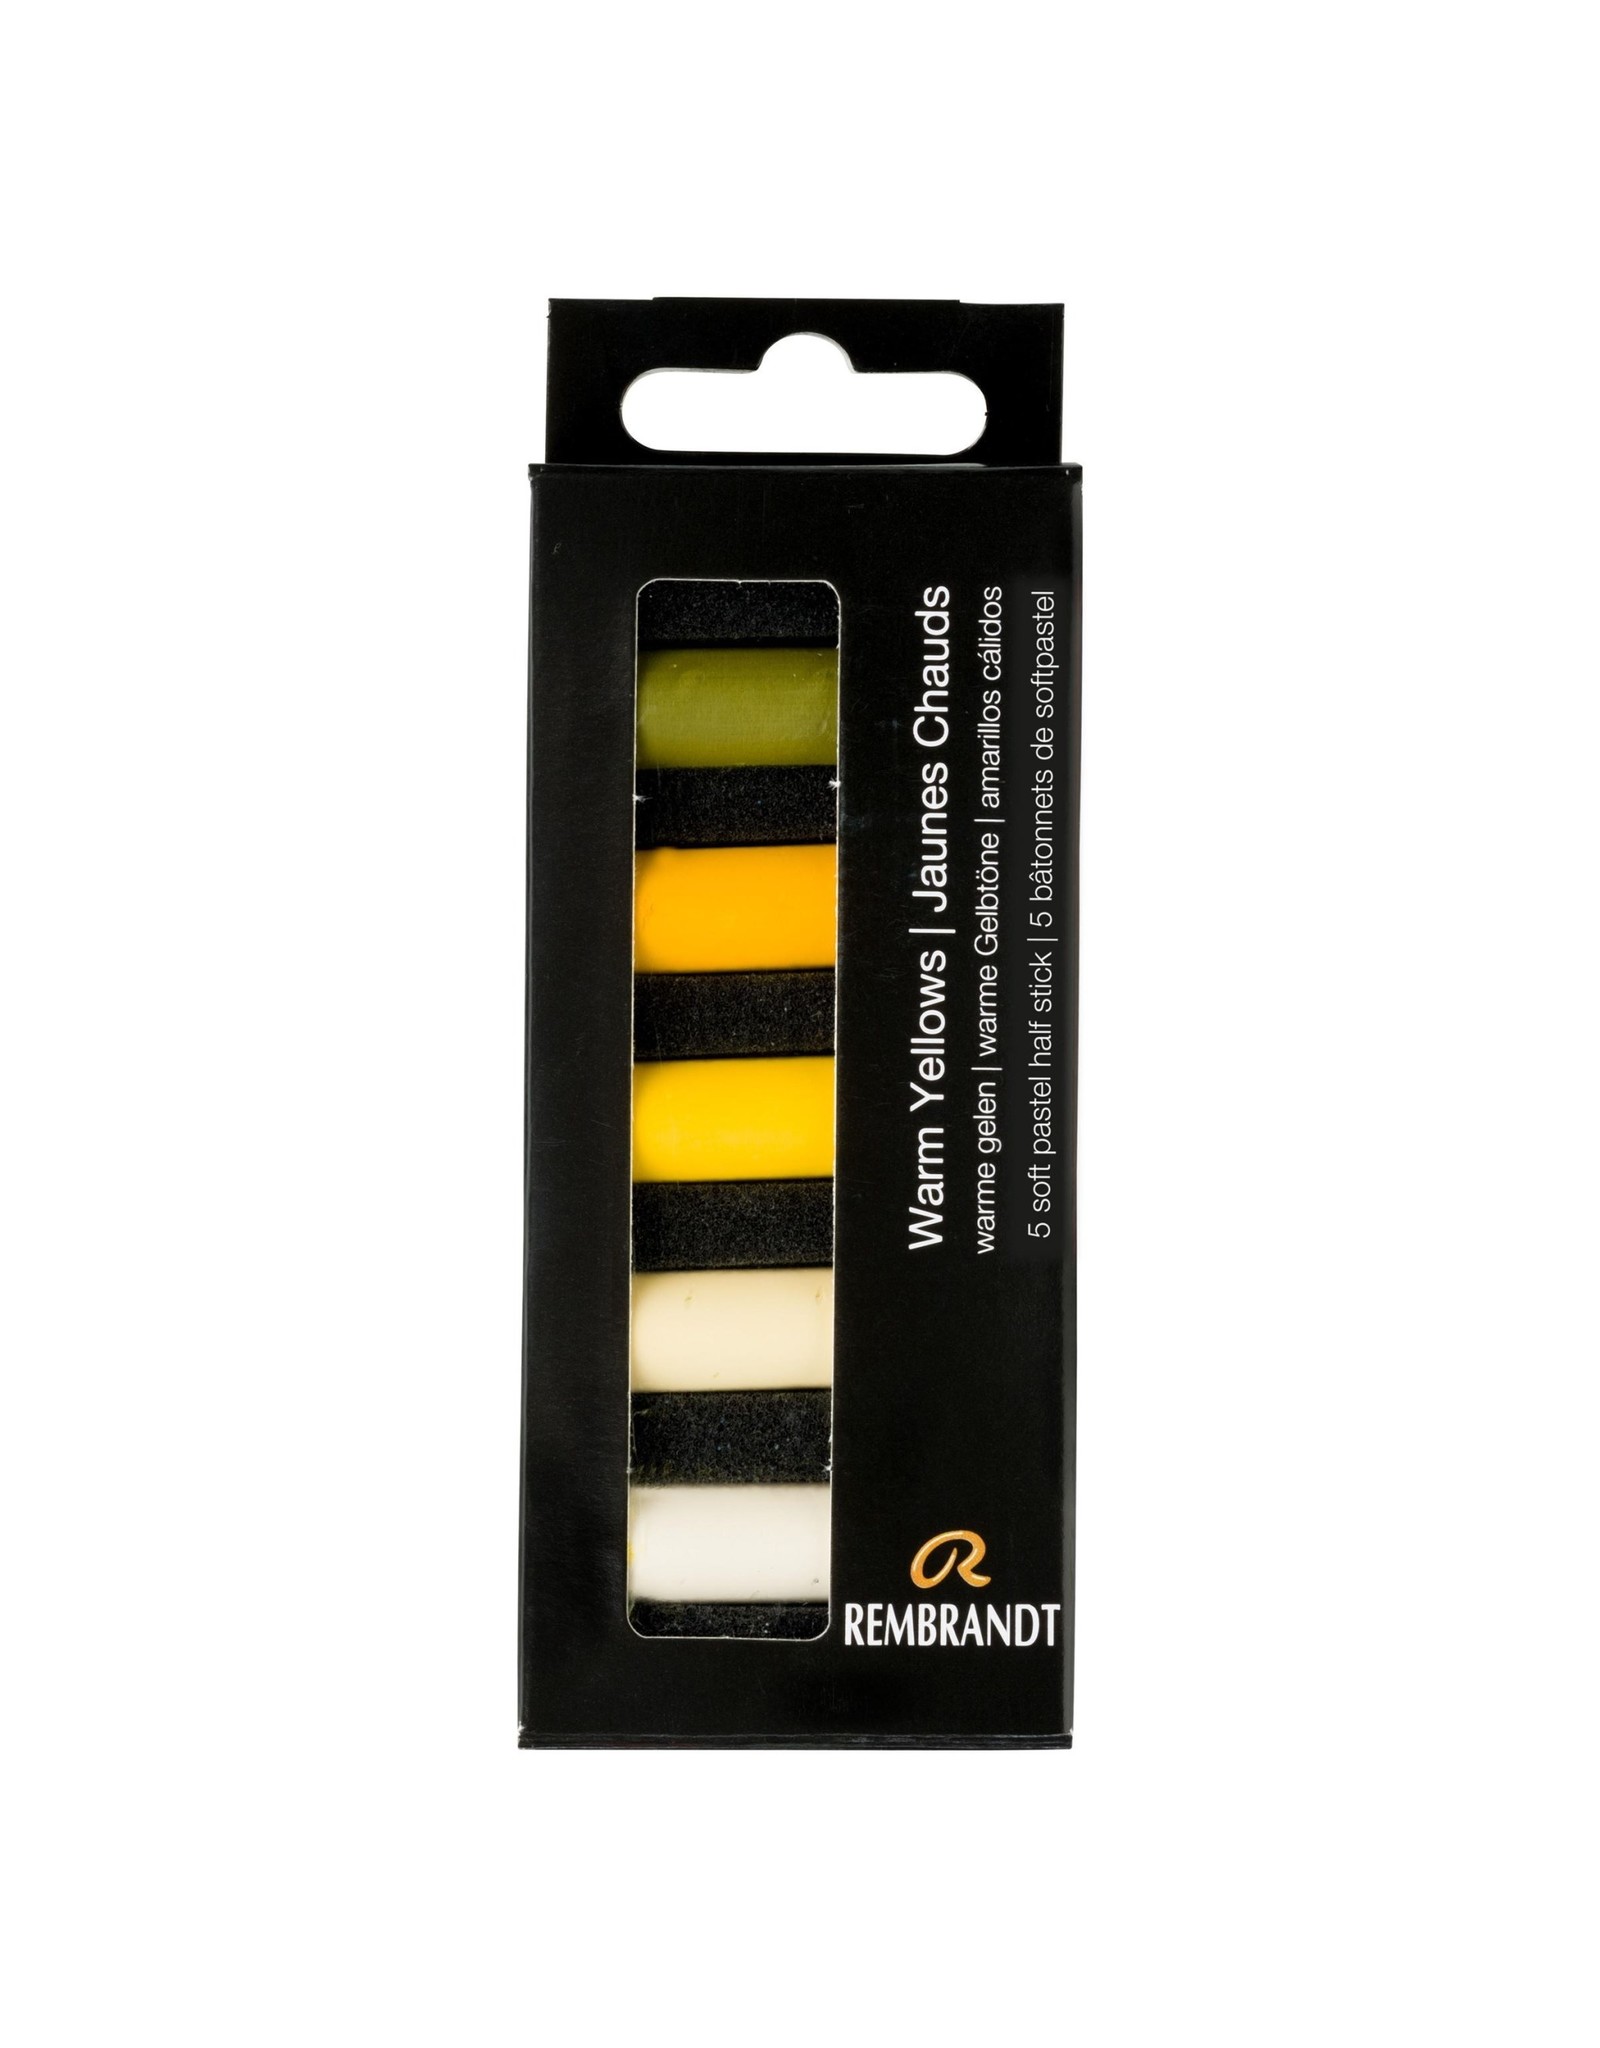 Royal Talens Rembrandt Soft Pastels, Warm Yellows Set of 5